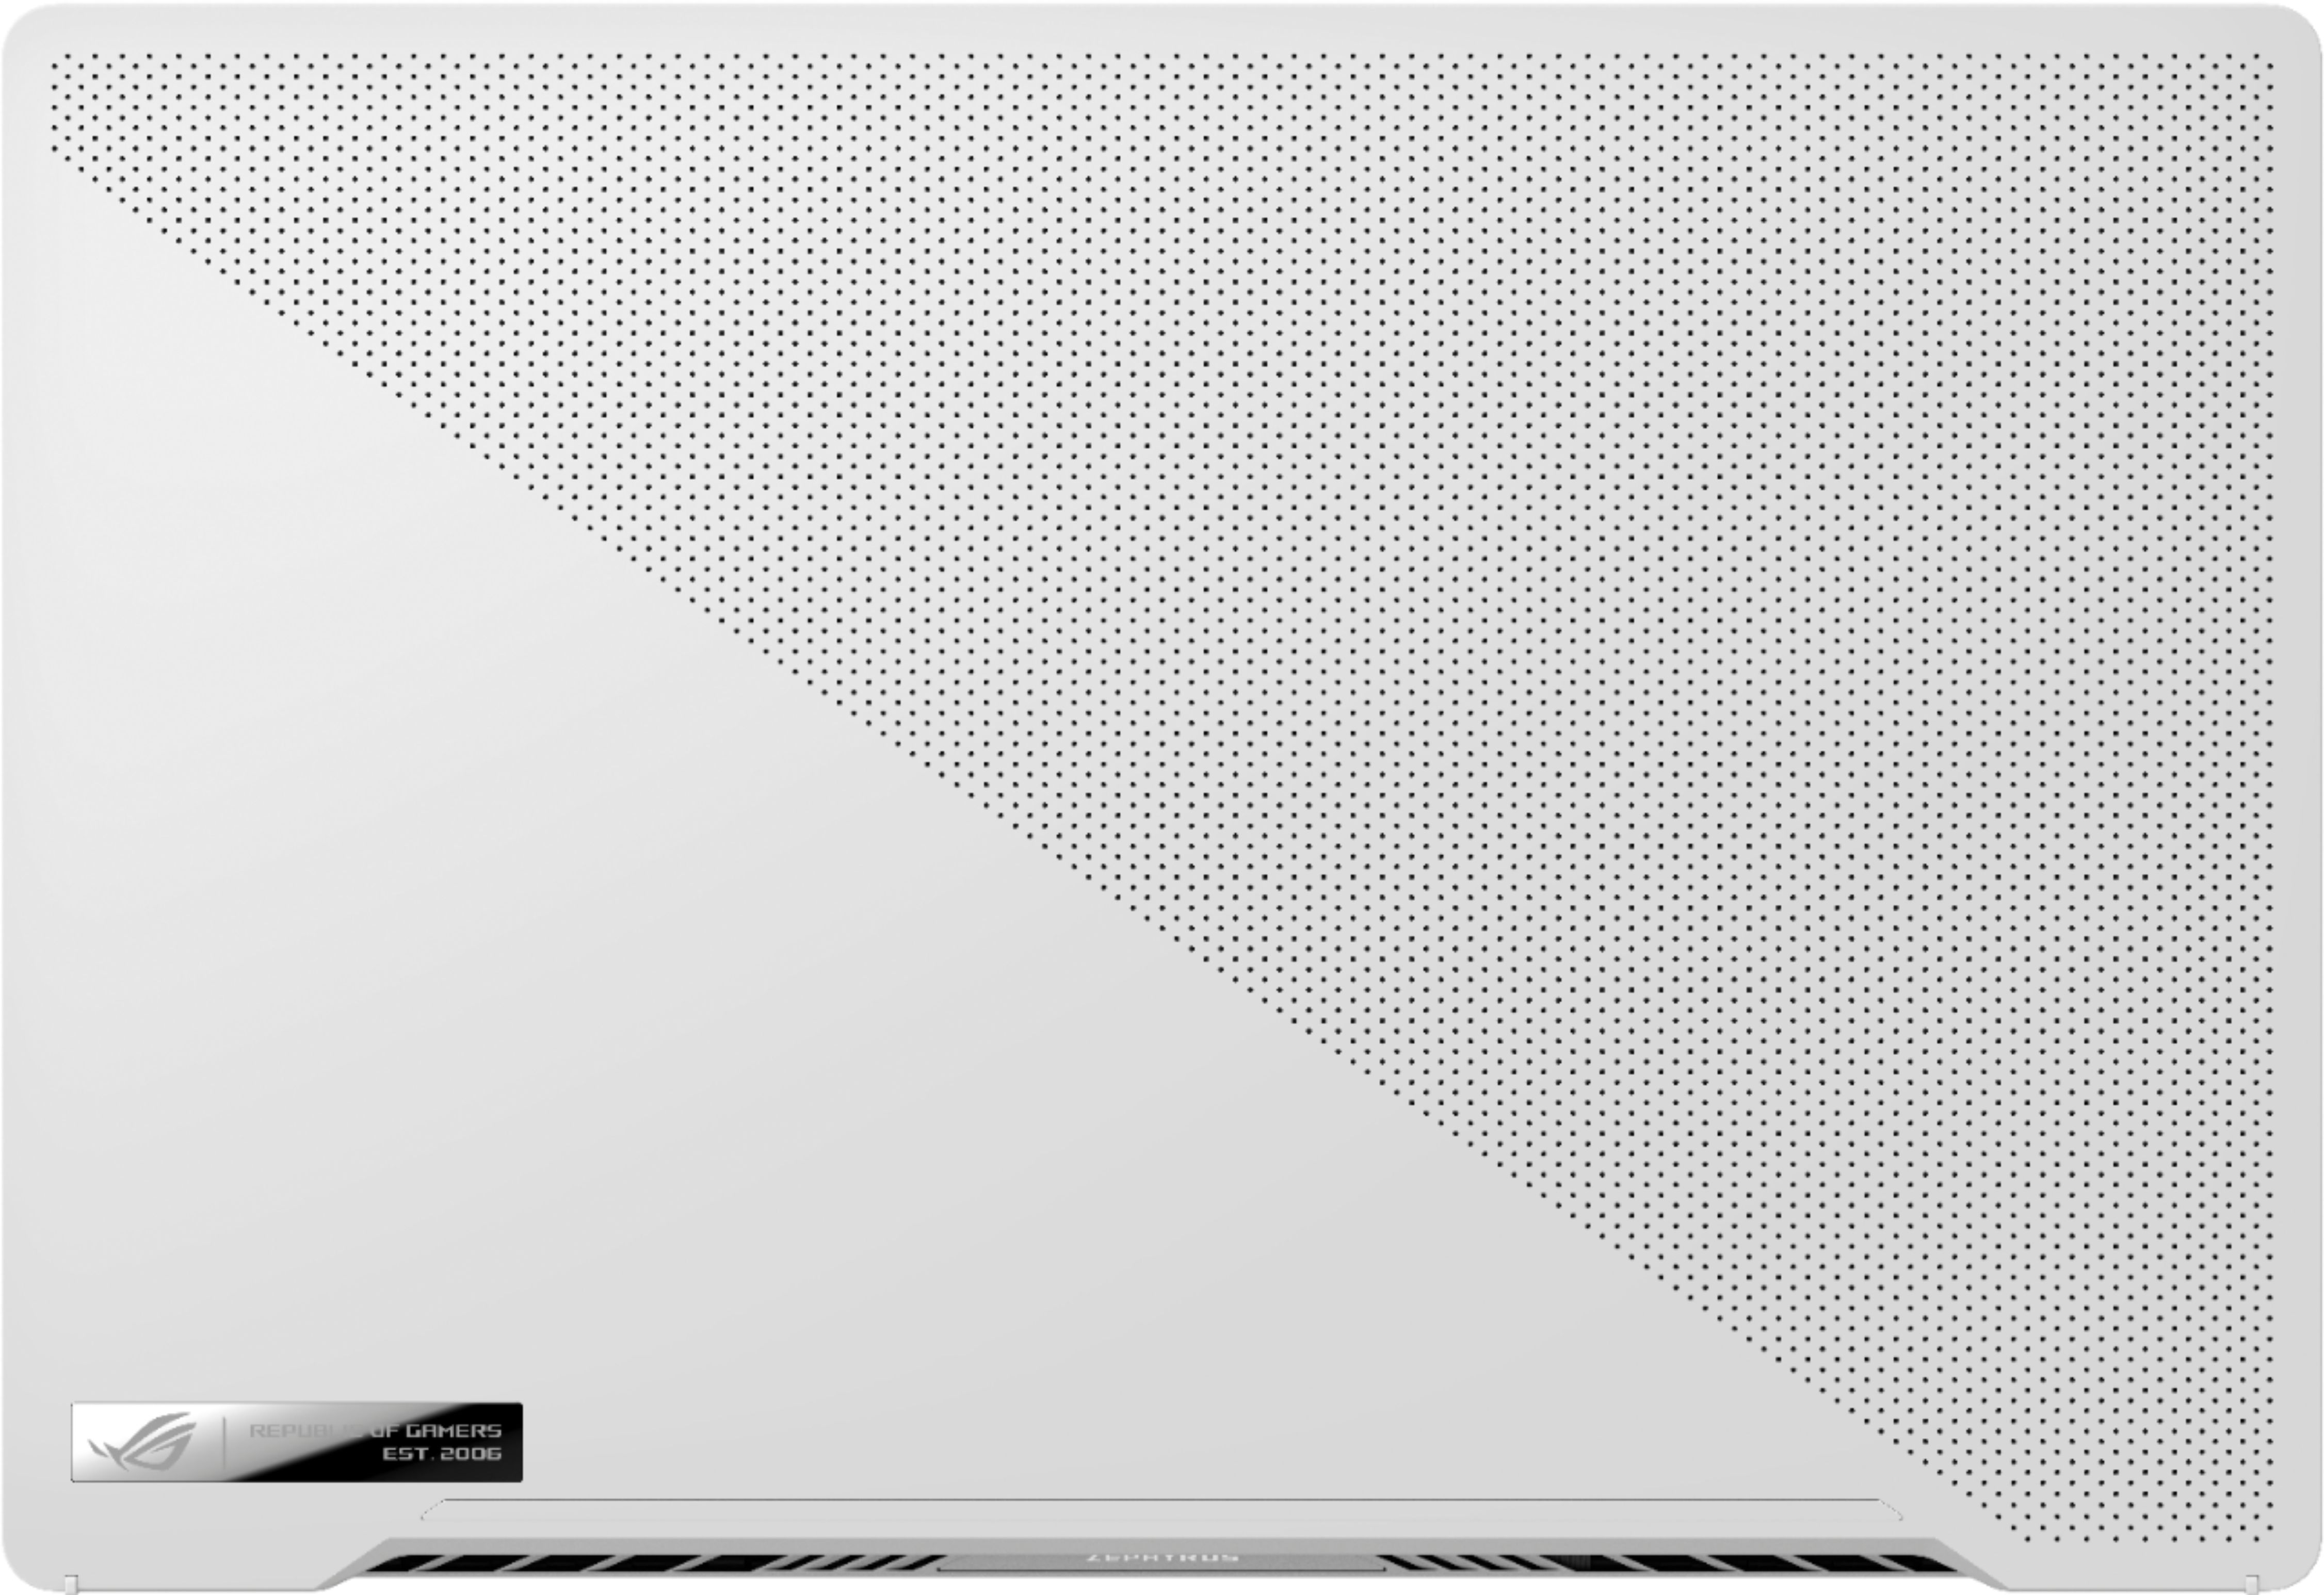 ASUS - ROG Zephyrus G14 14" Gaming Laptop - AMD Ryzen 9 - 16GB Memory - NVIDIA GeForce RTX 2060 Max-Q - 1TB SSD - Moonlight White